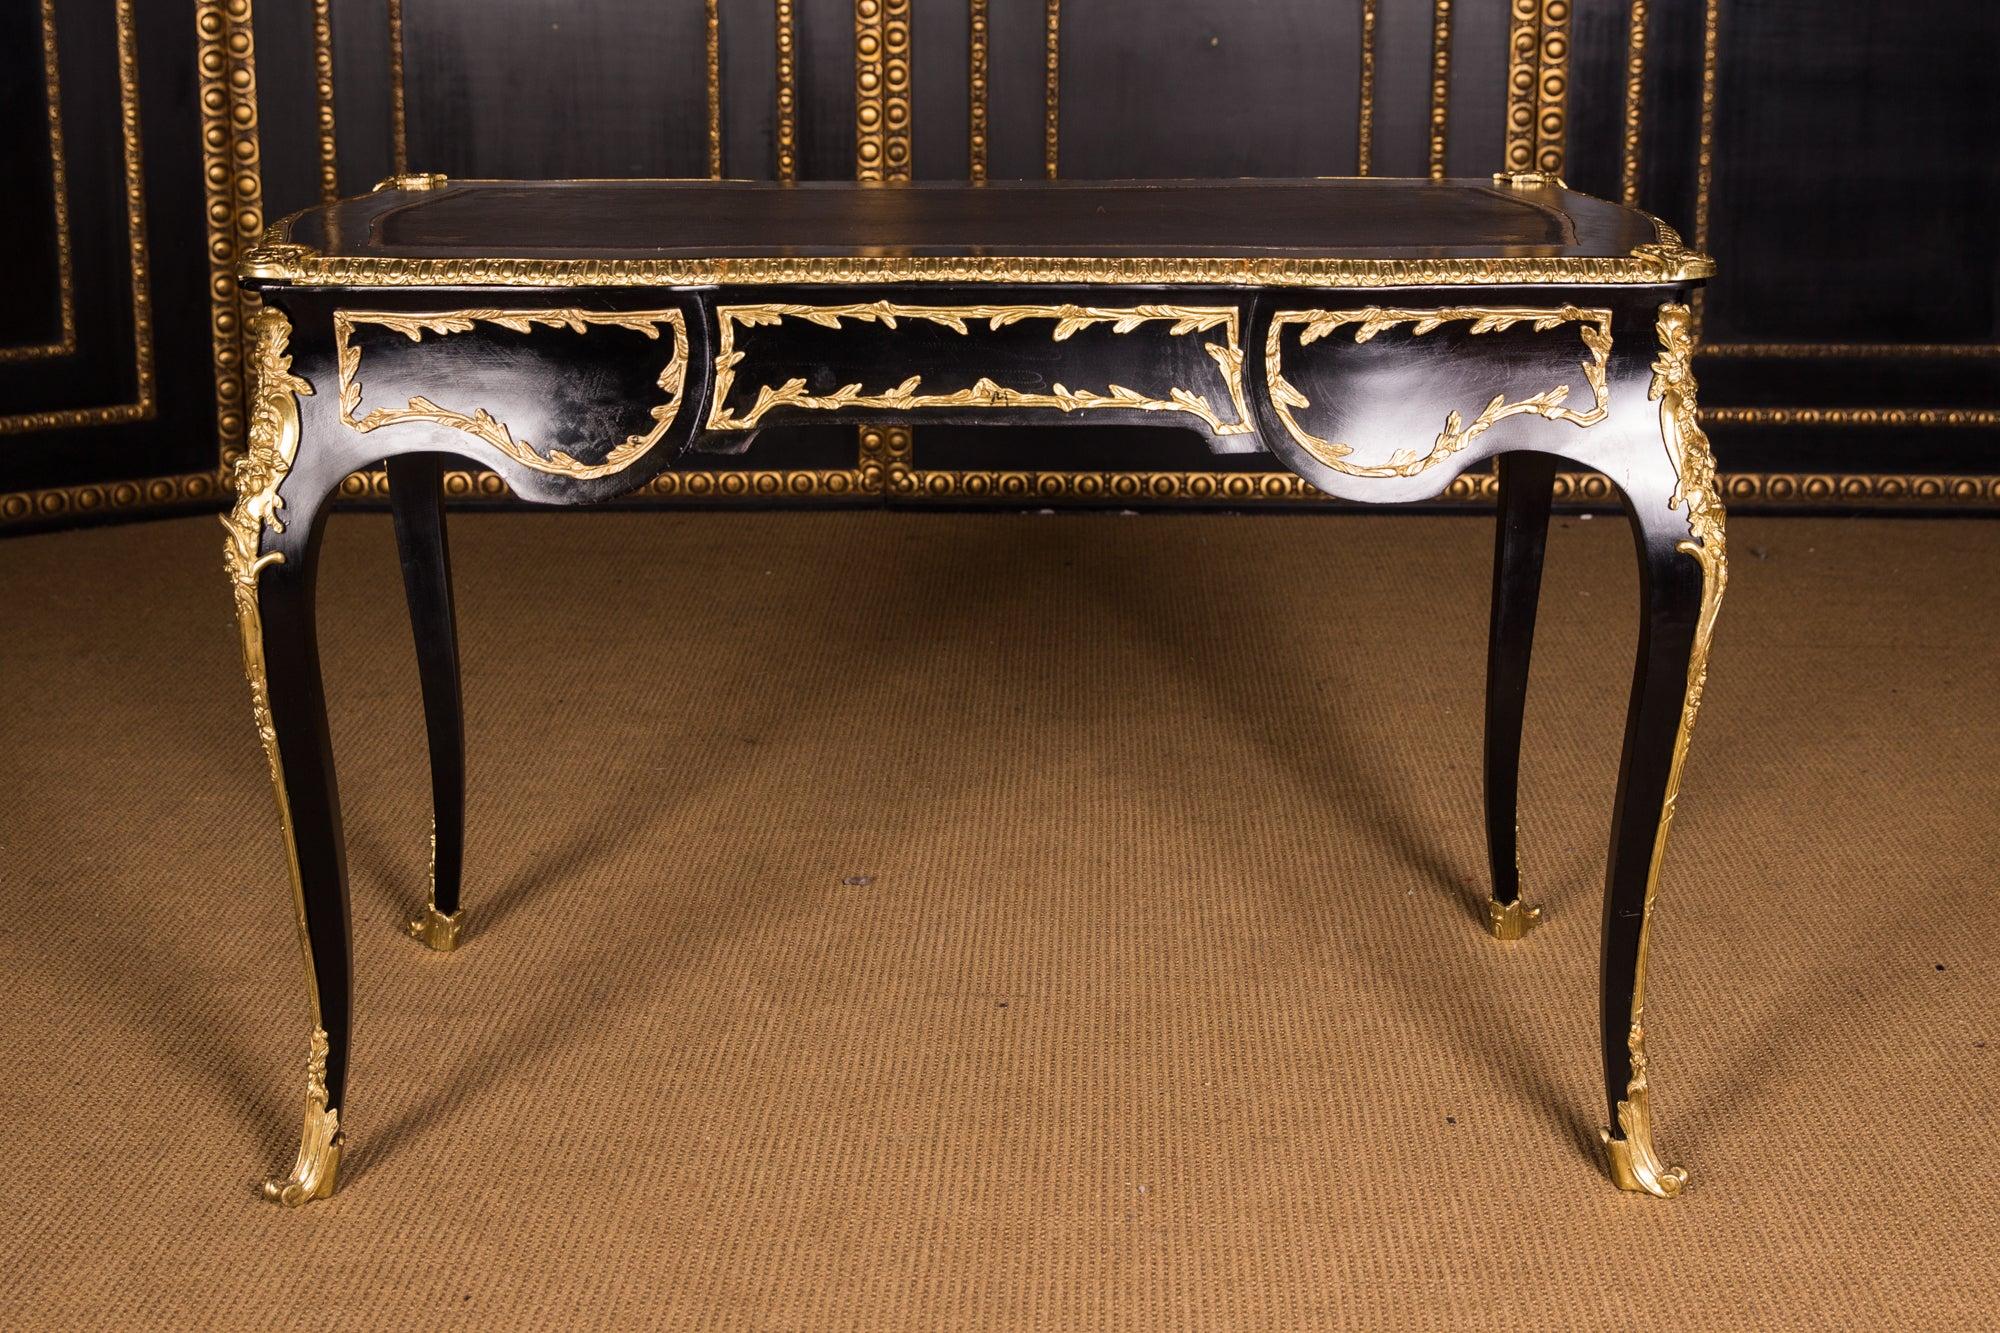 20th Century French Bureau Plat Desk in the Louis XV Style Black Ebonized Veneer For Sale 3